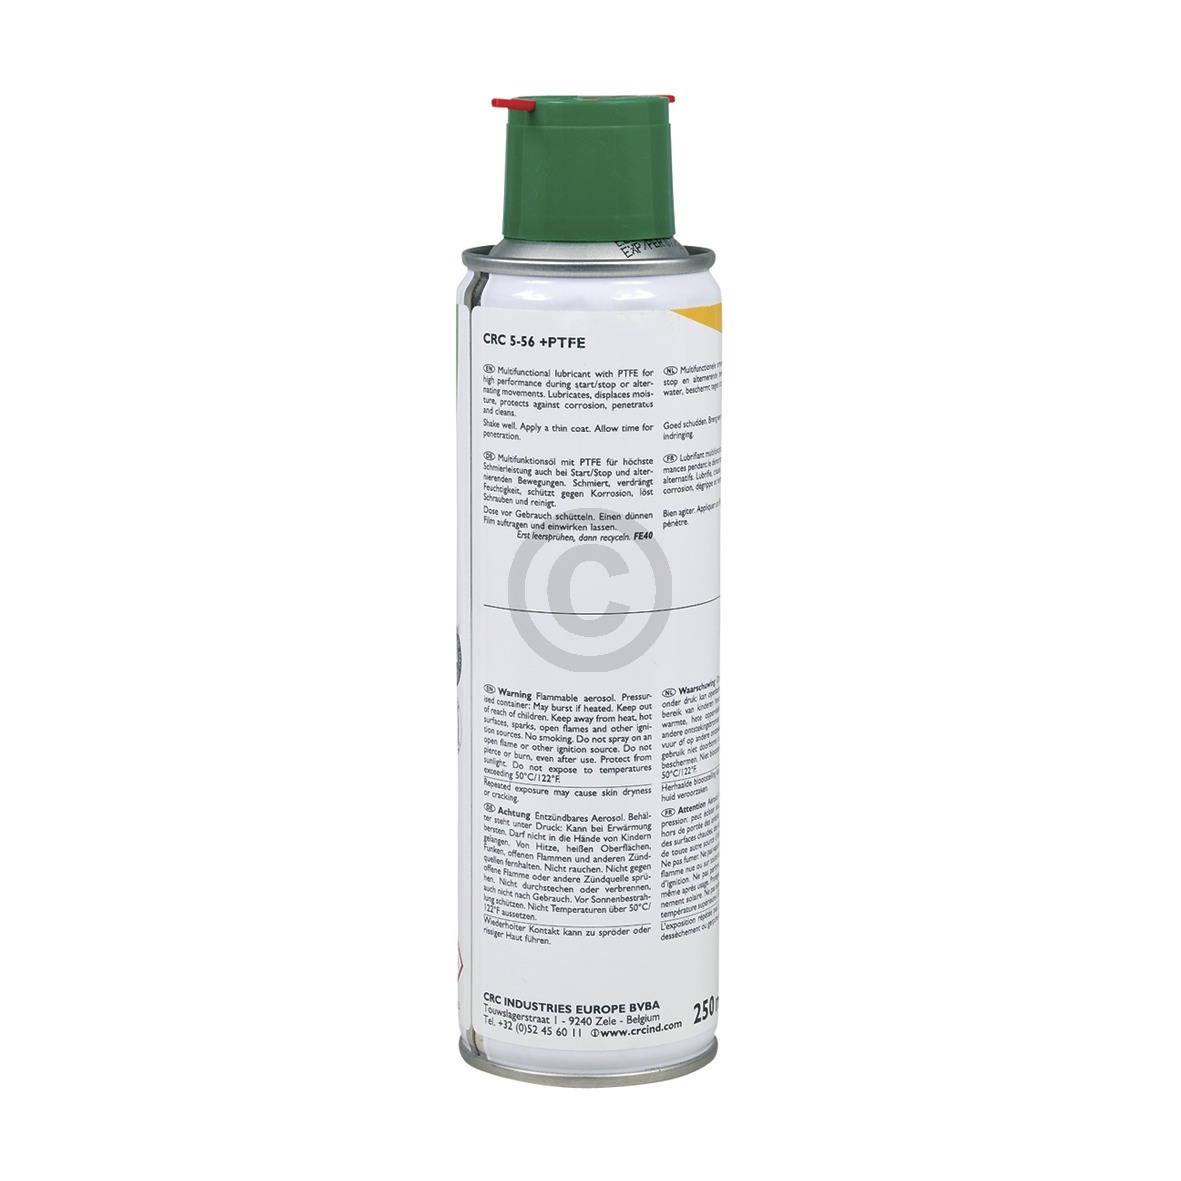 Multispray CRC 32703-AA 5-56+PTFE Multifunktionsöl mit PTFE Zusatz 250ml